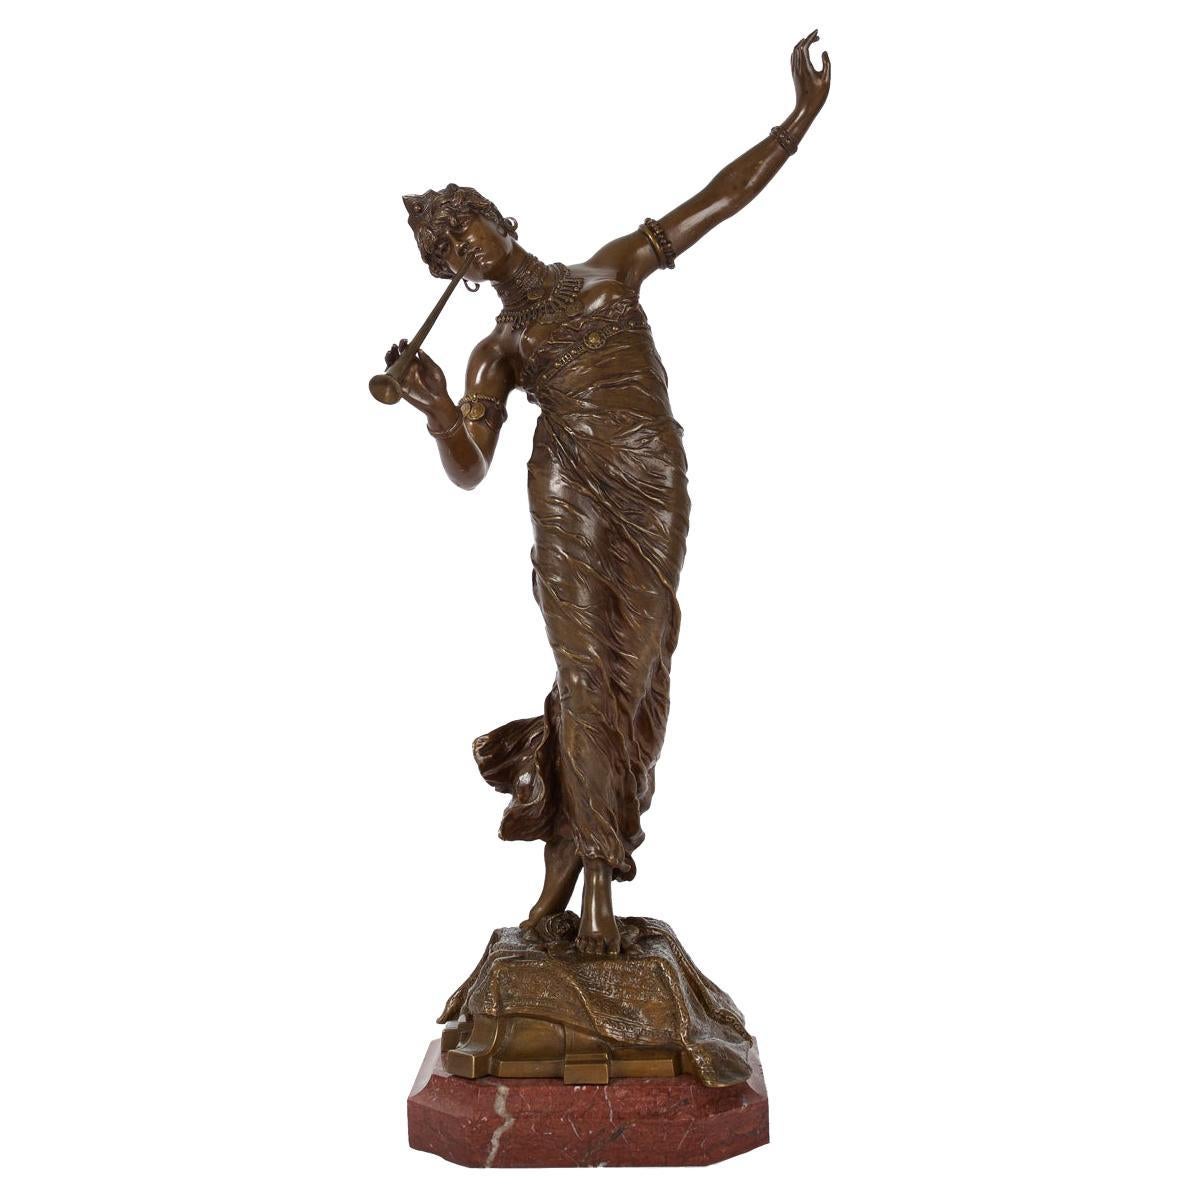 Art Nouveau Bronze Sculpture of Eastern Dancer by Franz Rosse(German, 1858-1900